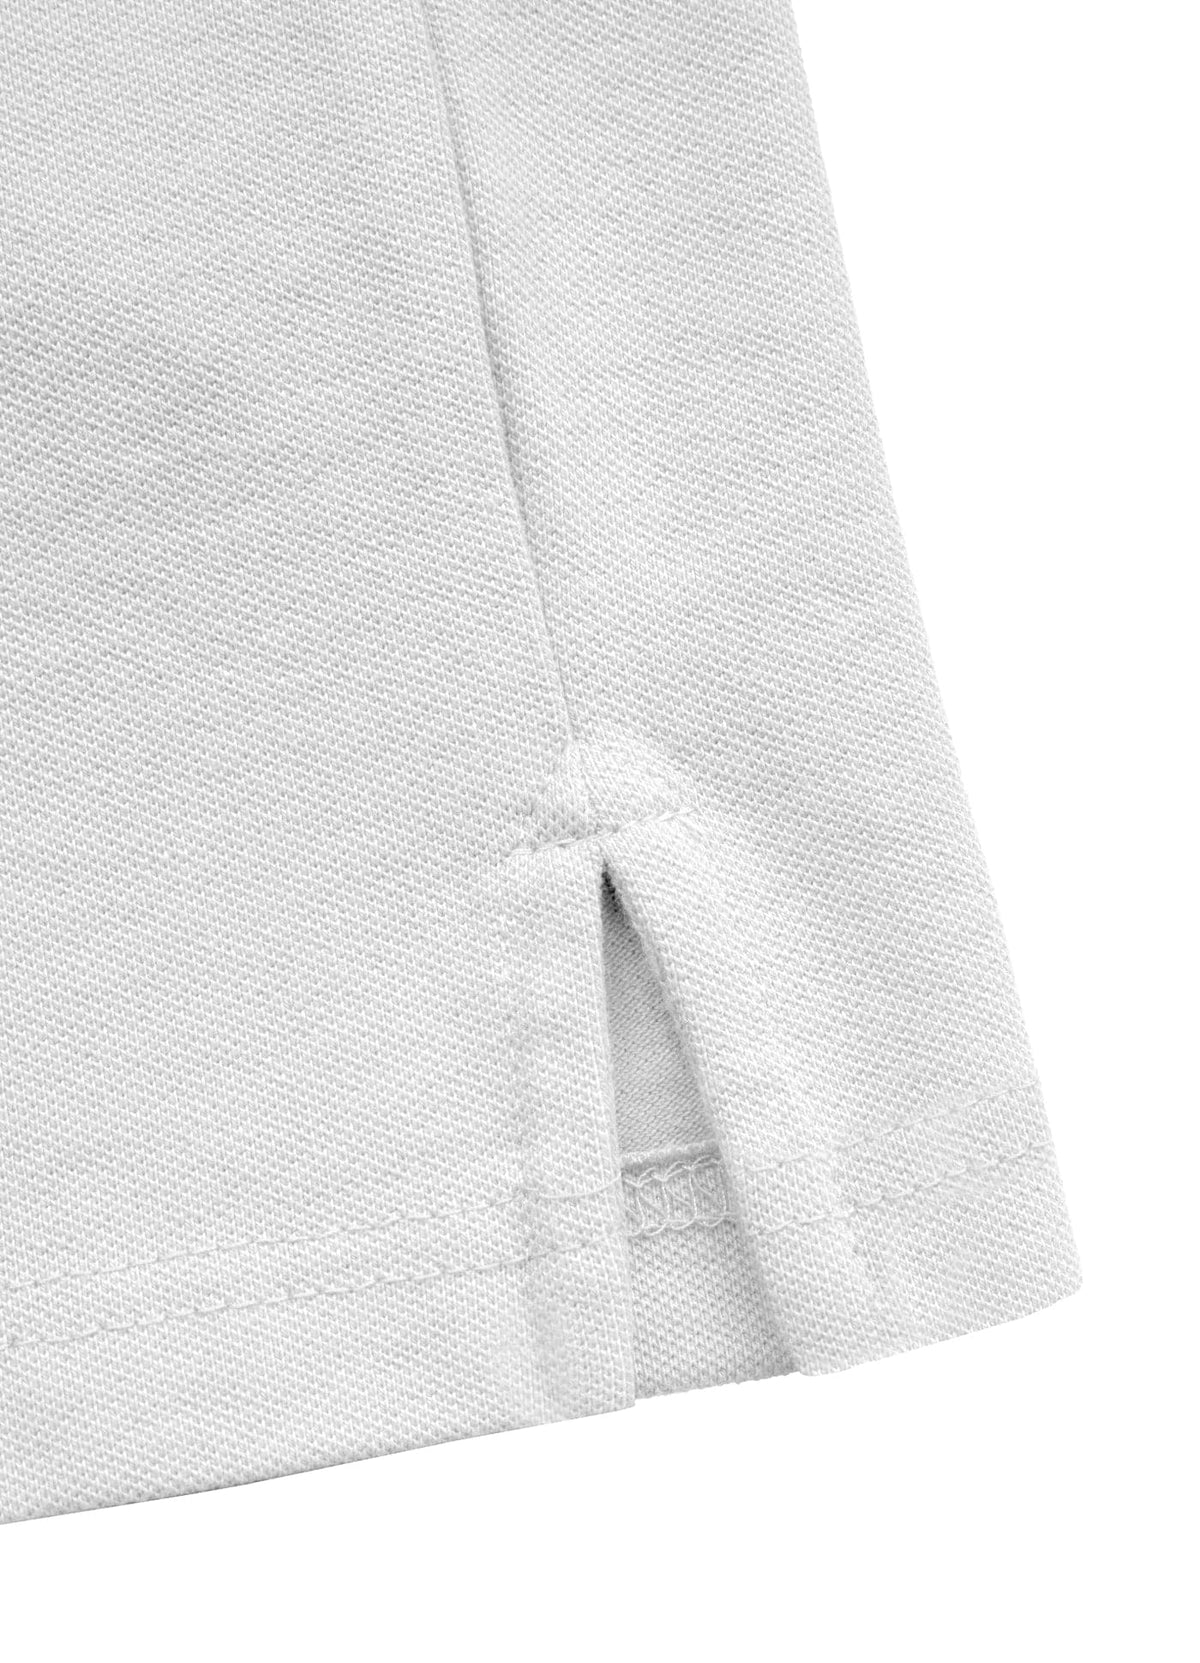 PIQUE STRIPES REGULAR White Polo T-shirt